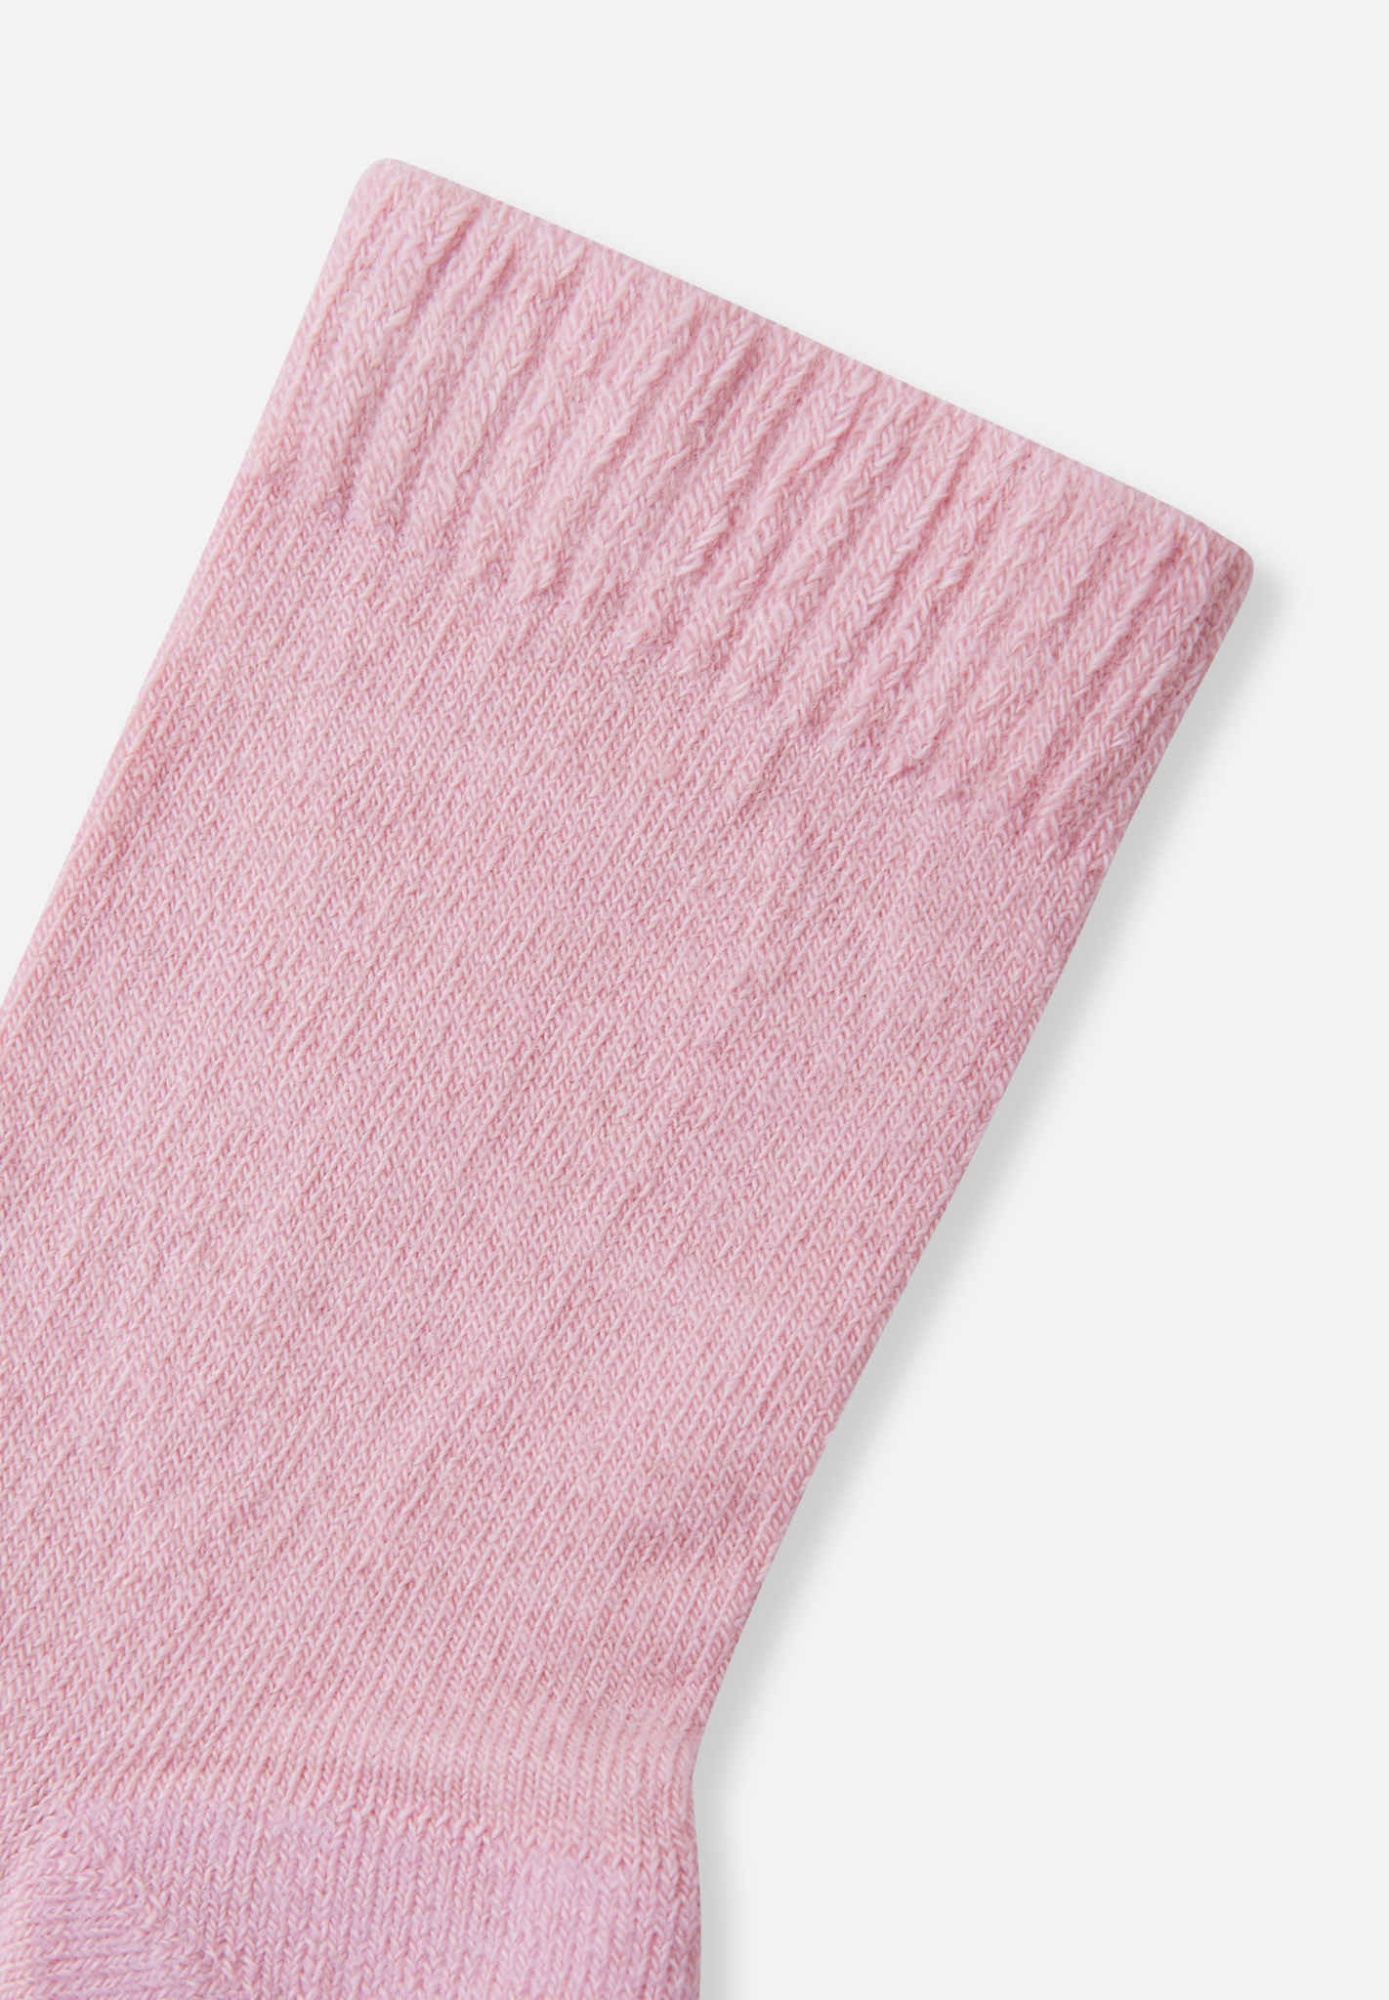 Носки Reima Liki Розовые | фото